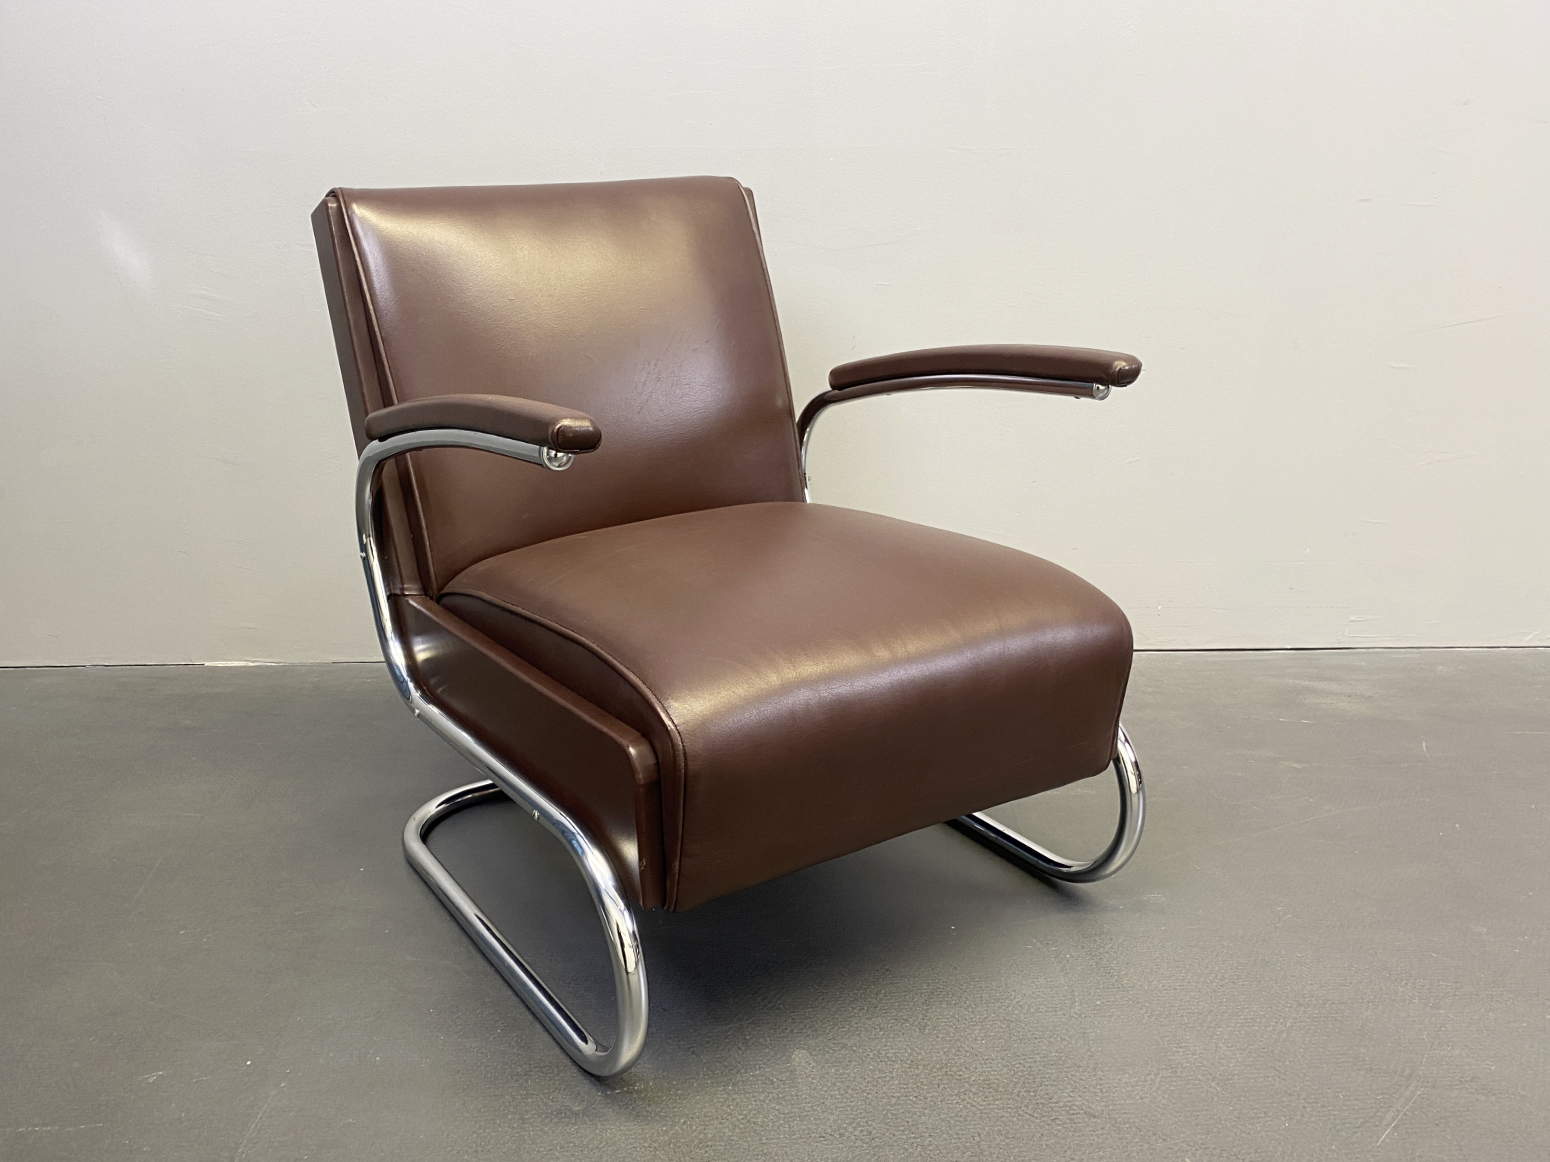 Armchair / Easychair / Cantilever tubular steel brown leather from Mücke Melder, 1930s.